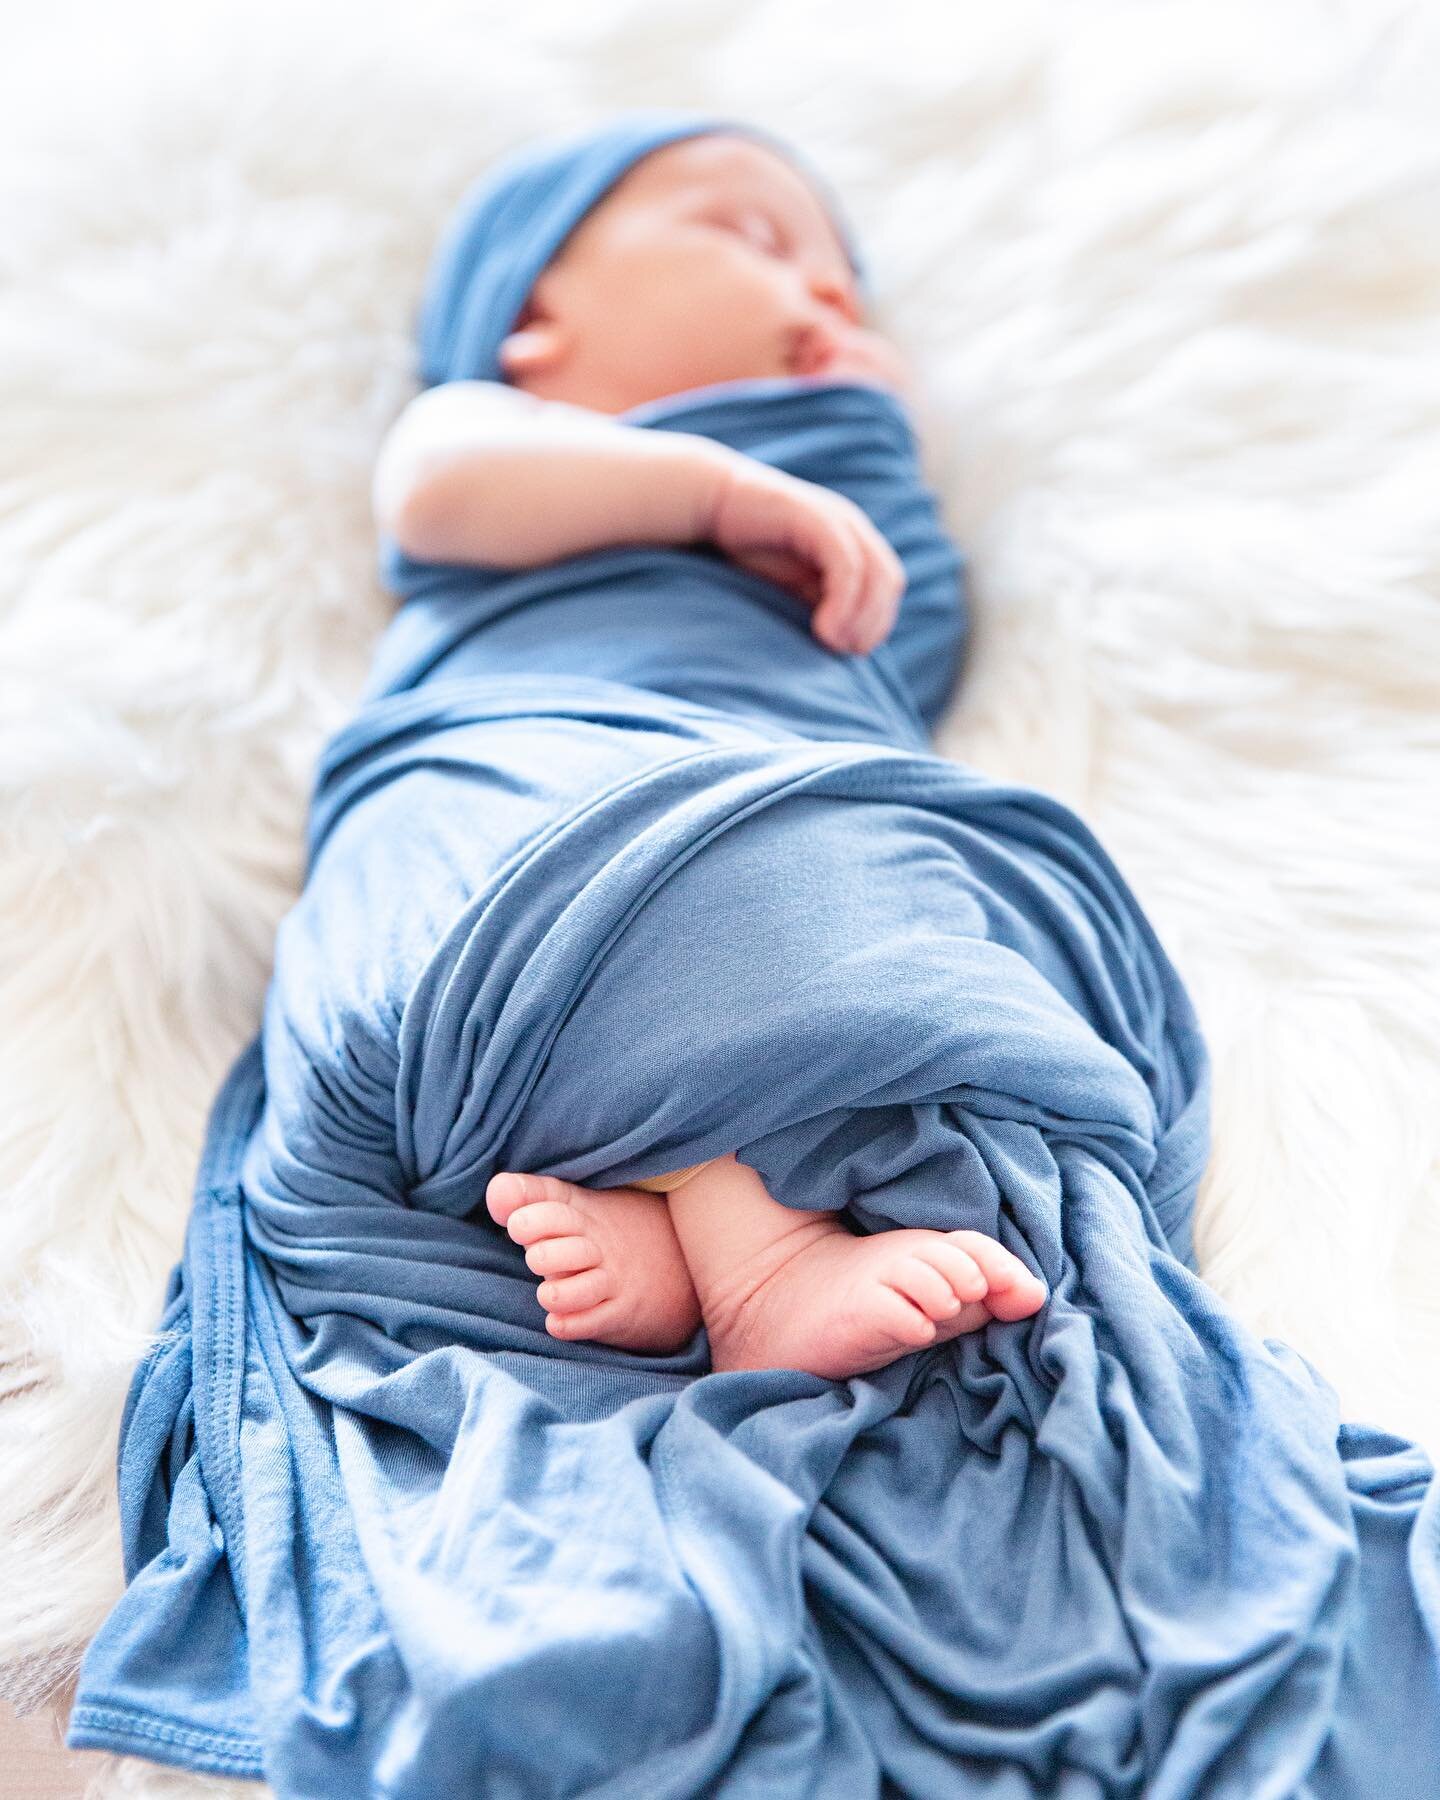 How precious are sleeping babies 😍